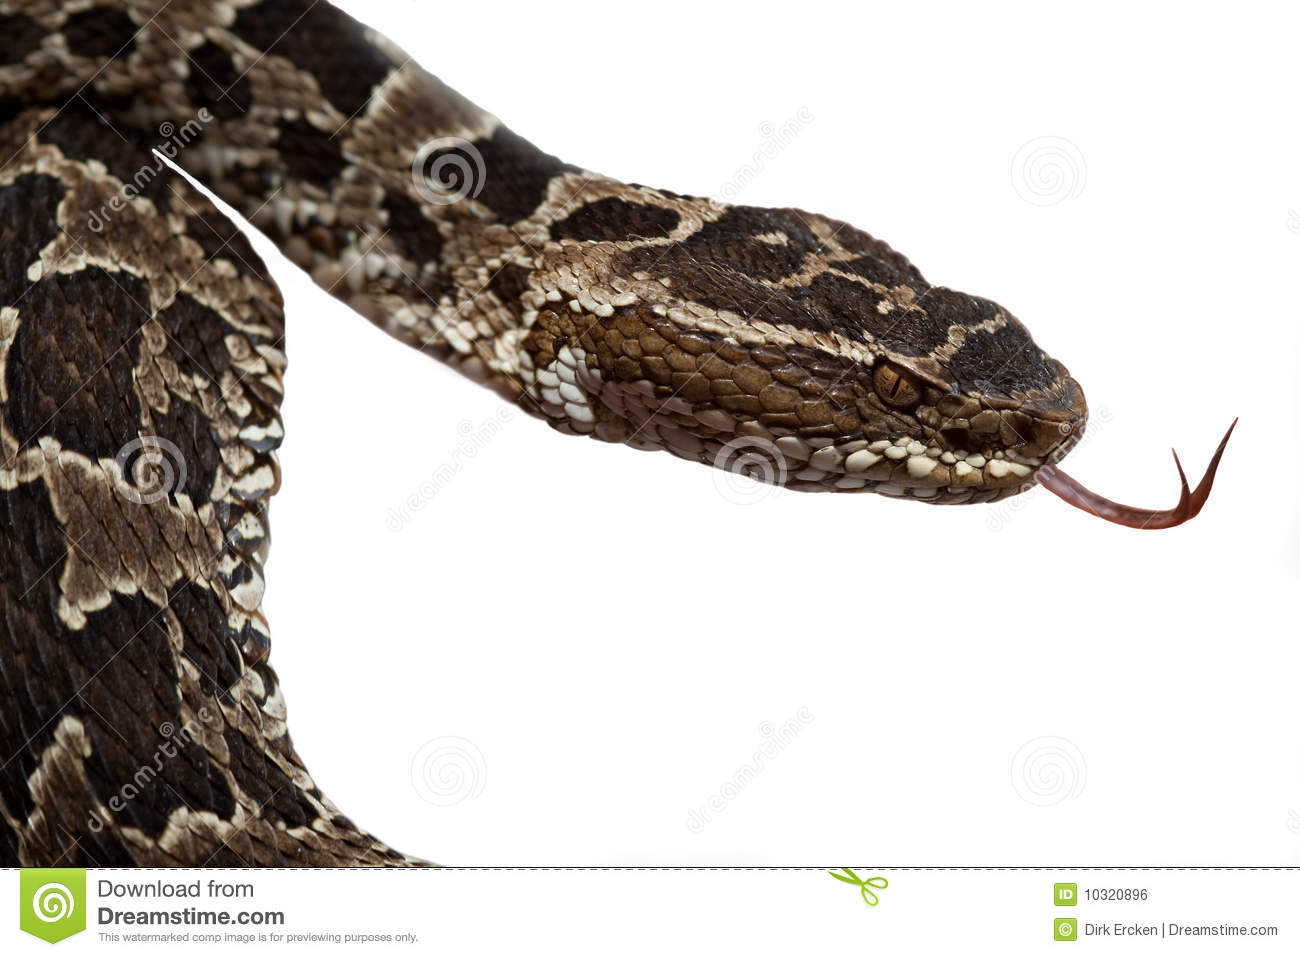 Lance Or Bothrops Fllckering Its Thong Toxic Serpent From Amazon Rain